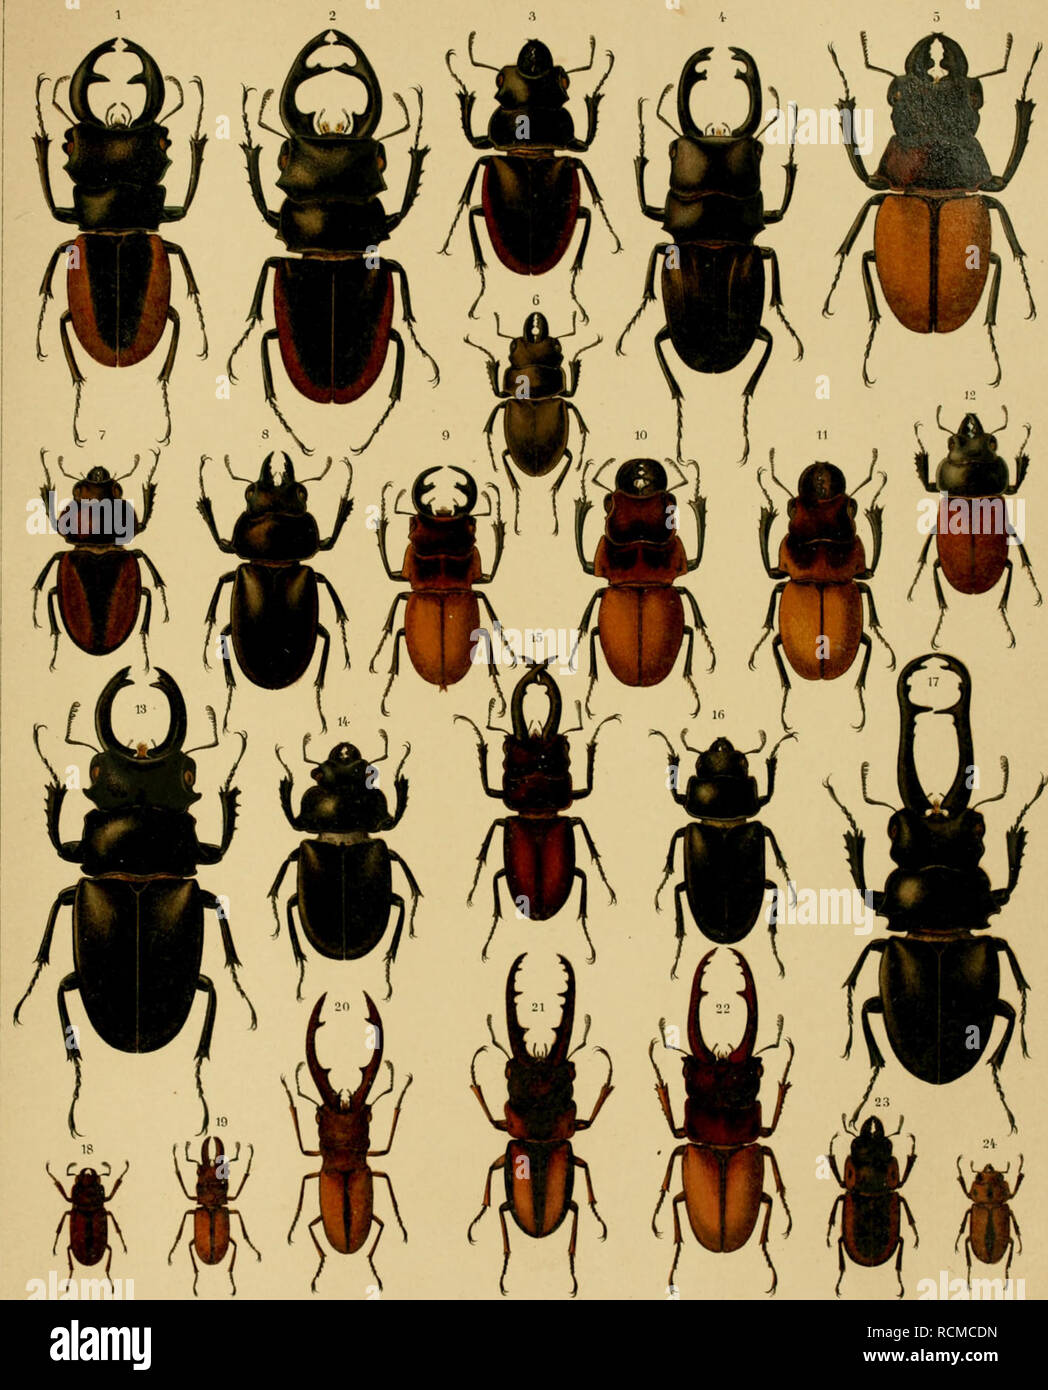 . Die exotischen Käfer in Wort und Bild. Beetles. Lueanidae II.. 1. Odontolabi» Wollastoni, 2, 8. »inensU, 4. carinatus, 5. gazella, 6. platynotus. 7. Neolocanug marginatus. 8. lania 9—11. Odont. Brookeanus. 18. Neolue. castanoptecus. 18. Odont. Siwa, 14. Dalmani. 15. Paalidoremus inolinatos. 16?, 17 &lt;J. Cladognathtis giraffa. 189, 19, 20g. CyolopUthalmus taraadus. gl. Cladogn. Savagei, Sä. oinnamomeu«, 98. bison, 81. oooipitalia. VerUc,- vgr. Err: Heyne,Leigag ... Please note that these images are extracted from scanned page images that may have been digitally enhanced for readability - c Stock Photo